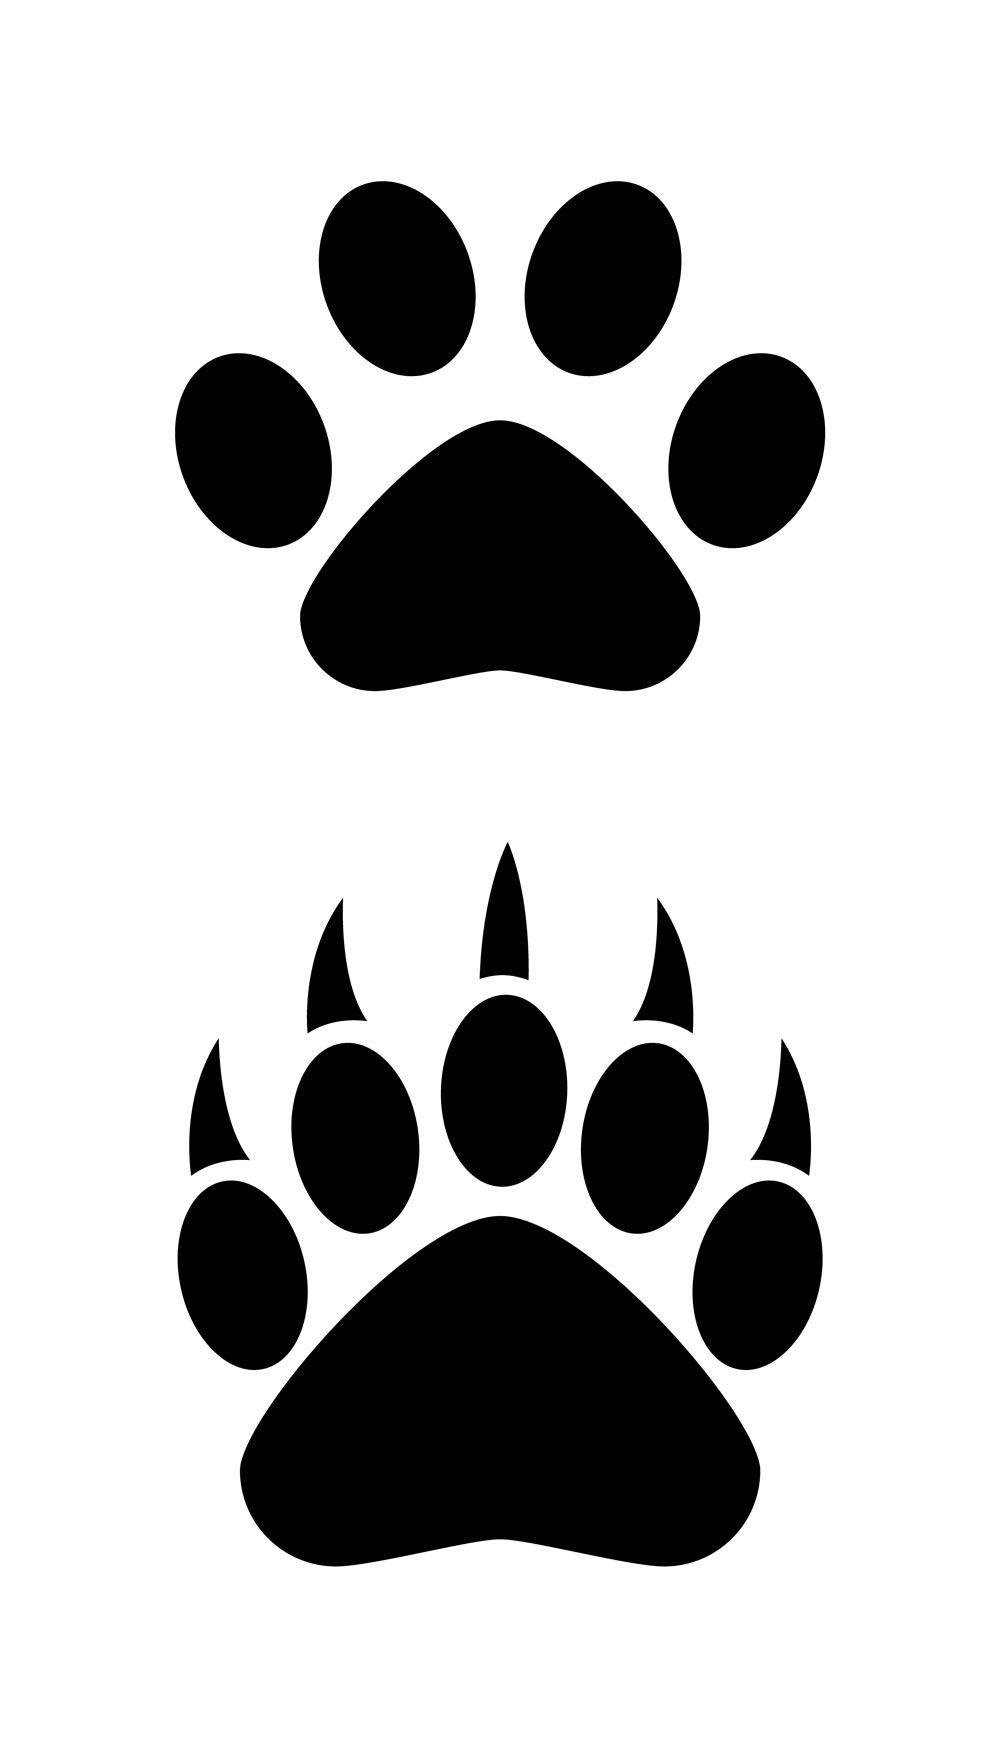 The Bear Paw Logo - Free Bear Paw Clipart, Download Free Clip Art, Free Clip Art on ...